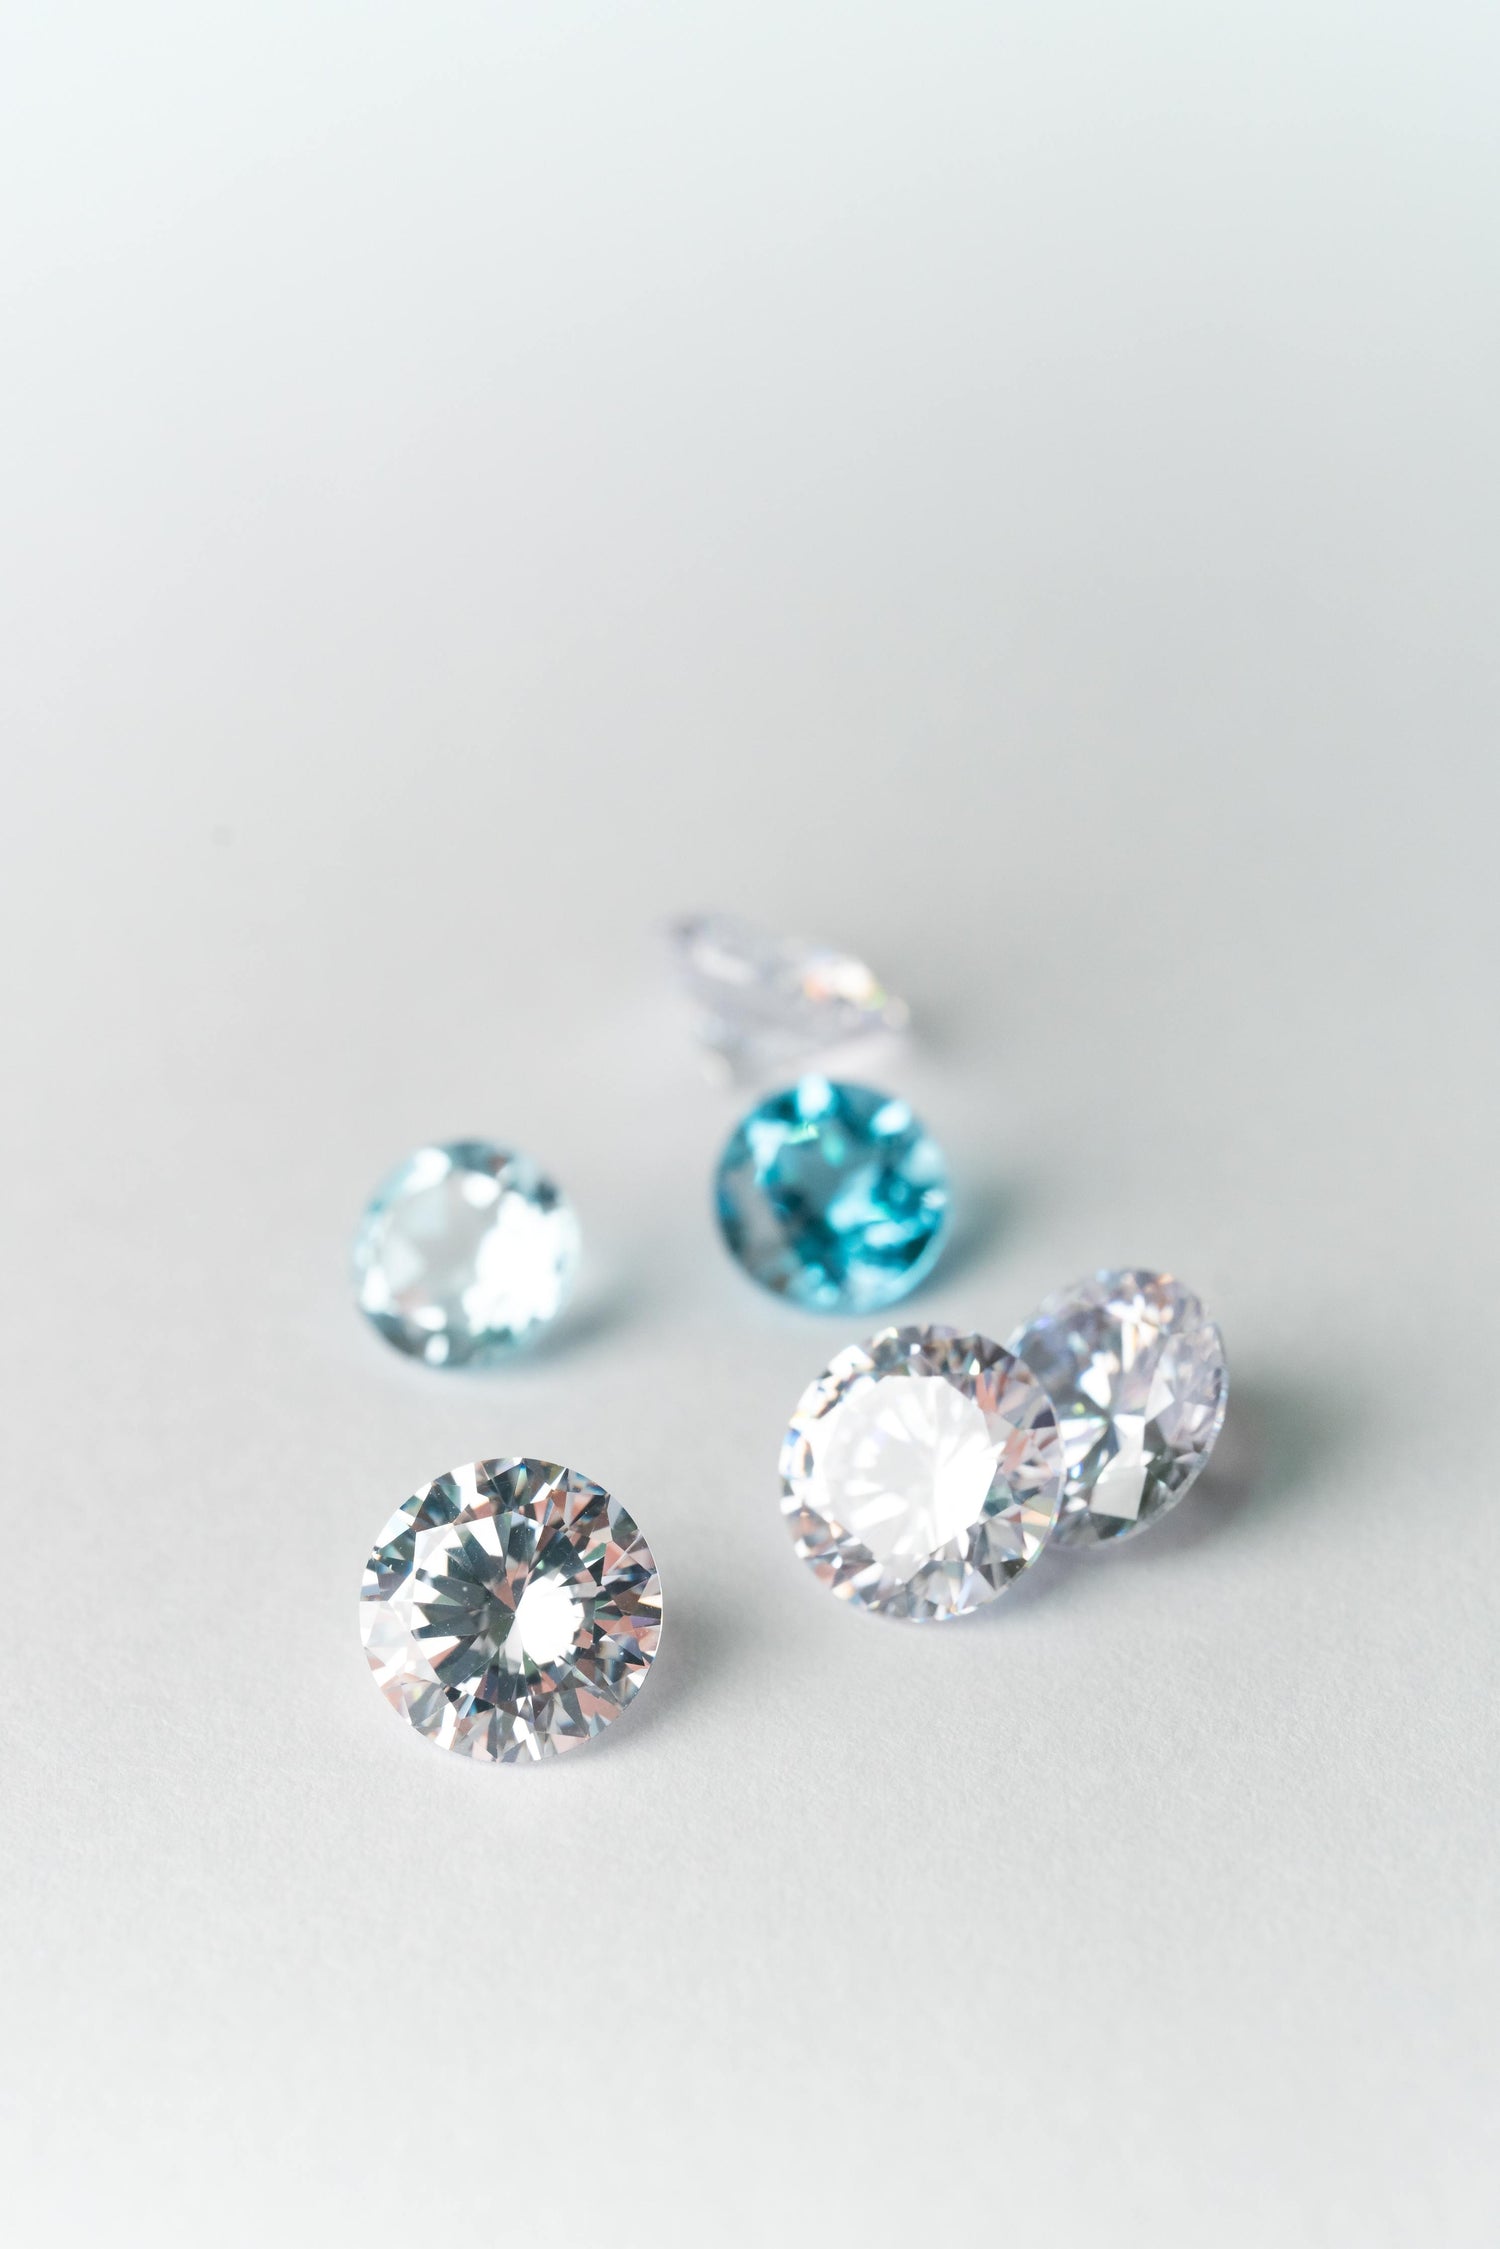 Loose Diamonds (Heera) and Blue Sapphires (Neelam)